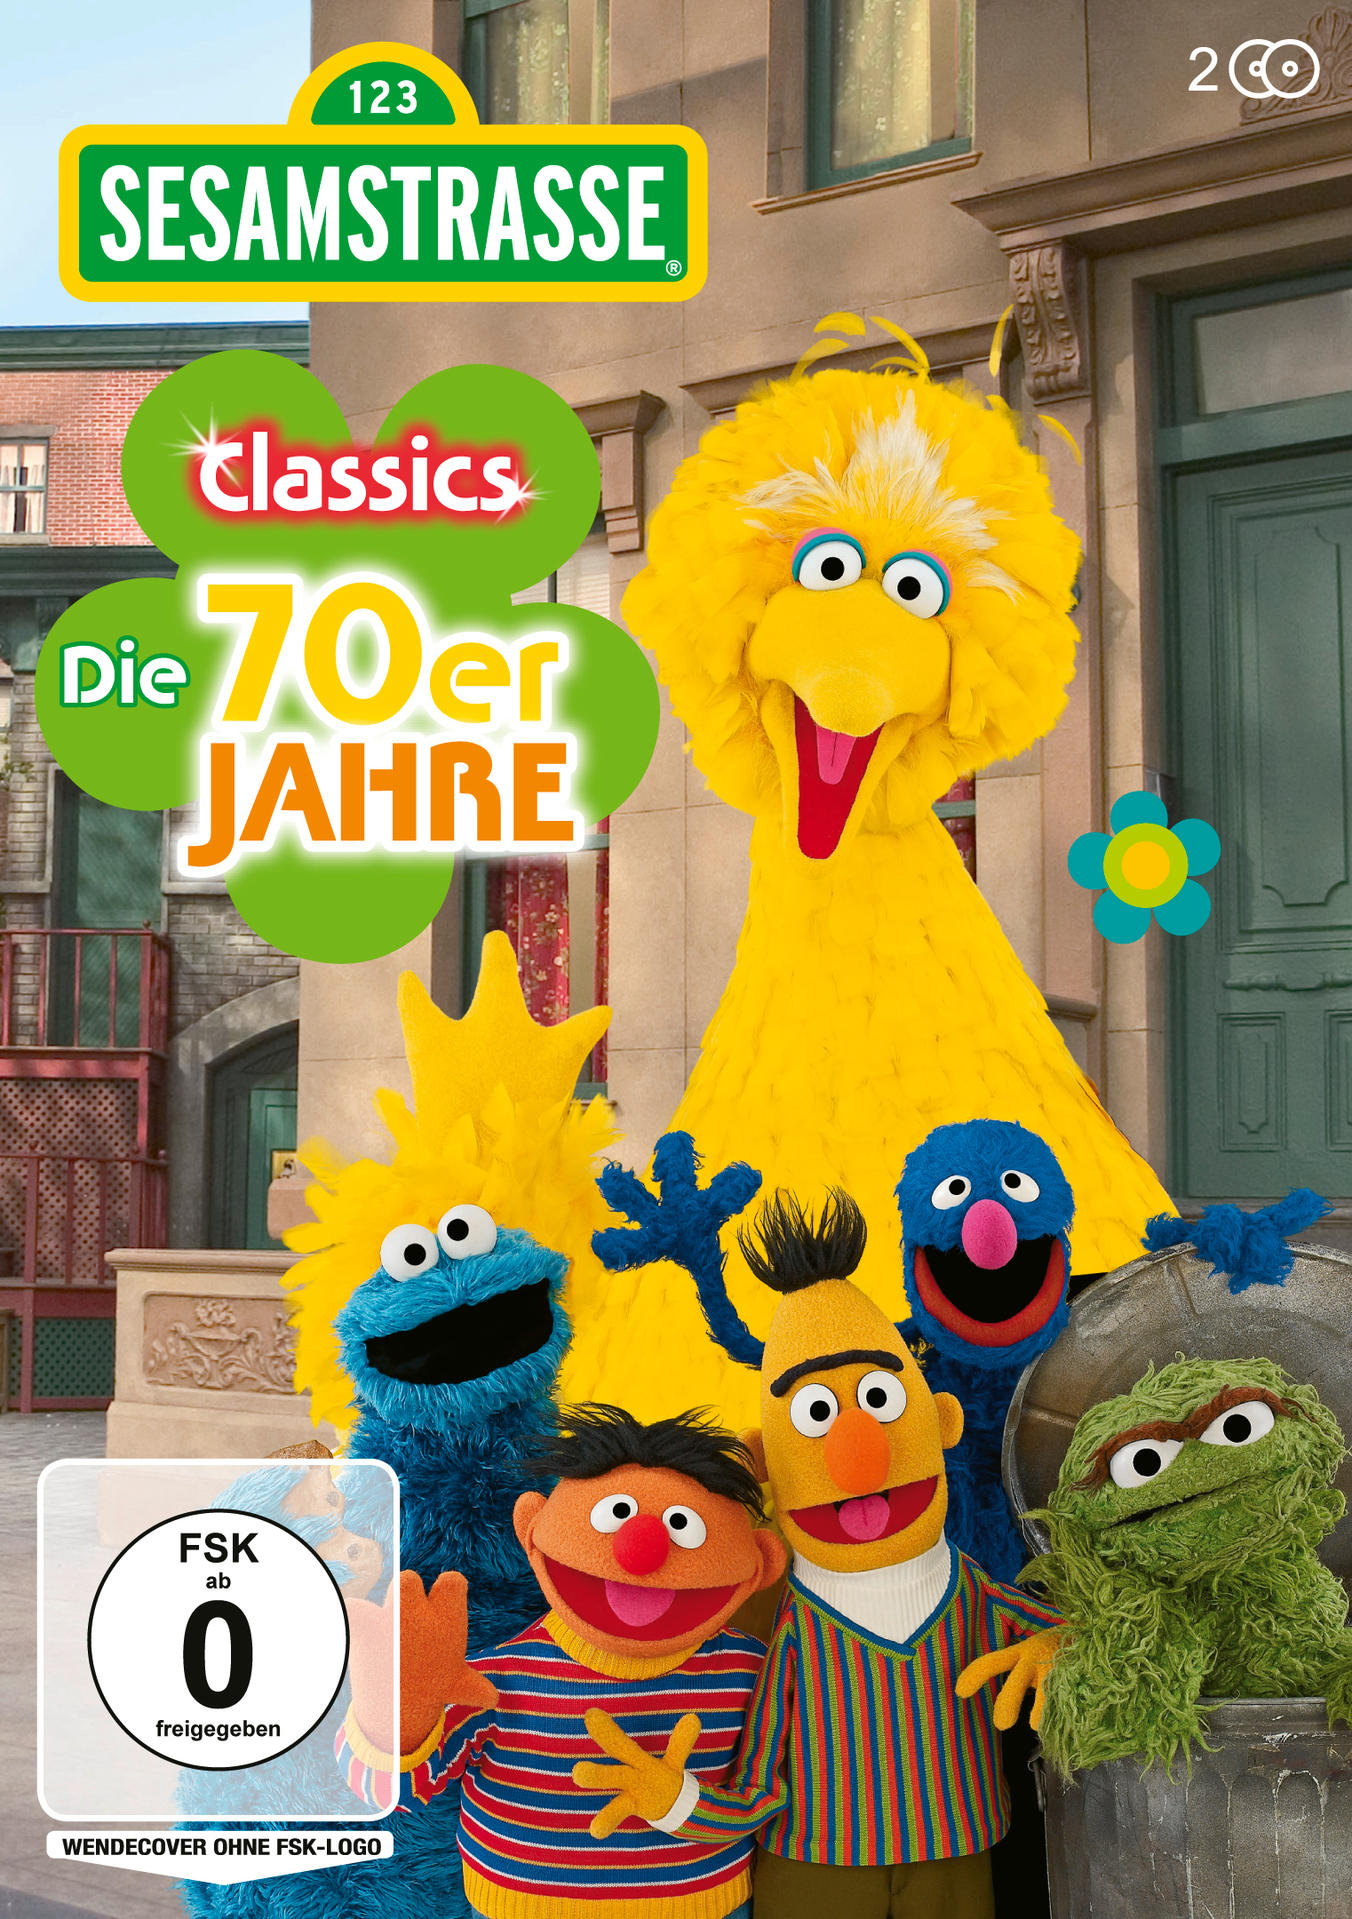 Sesamstraße 70er - Classics Die Jahre DVD